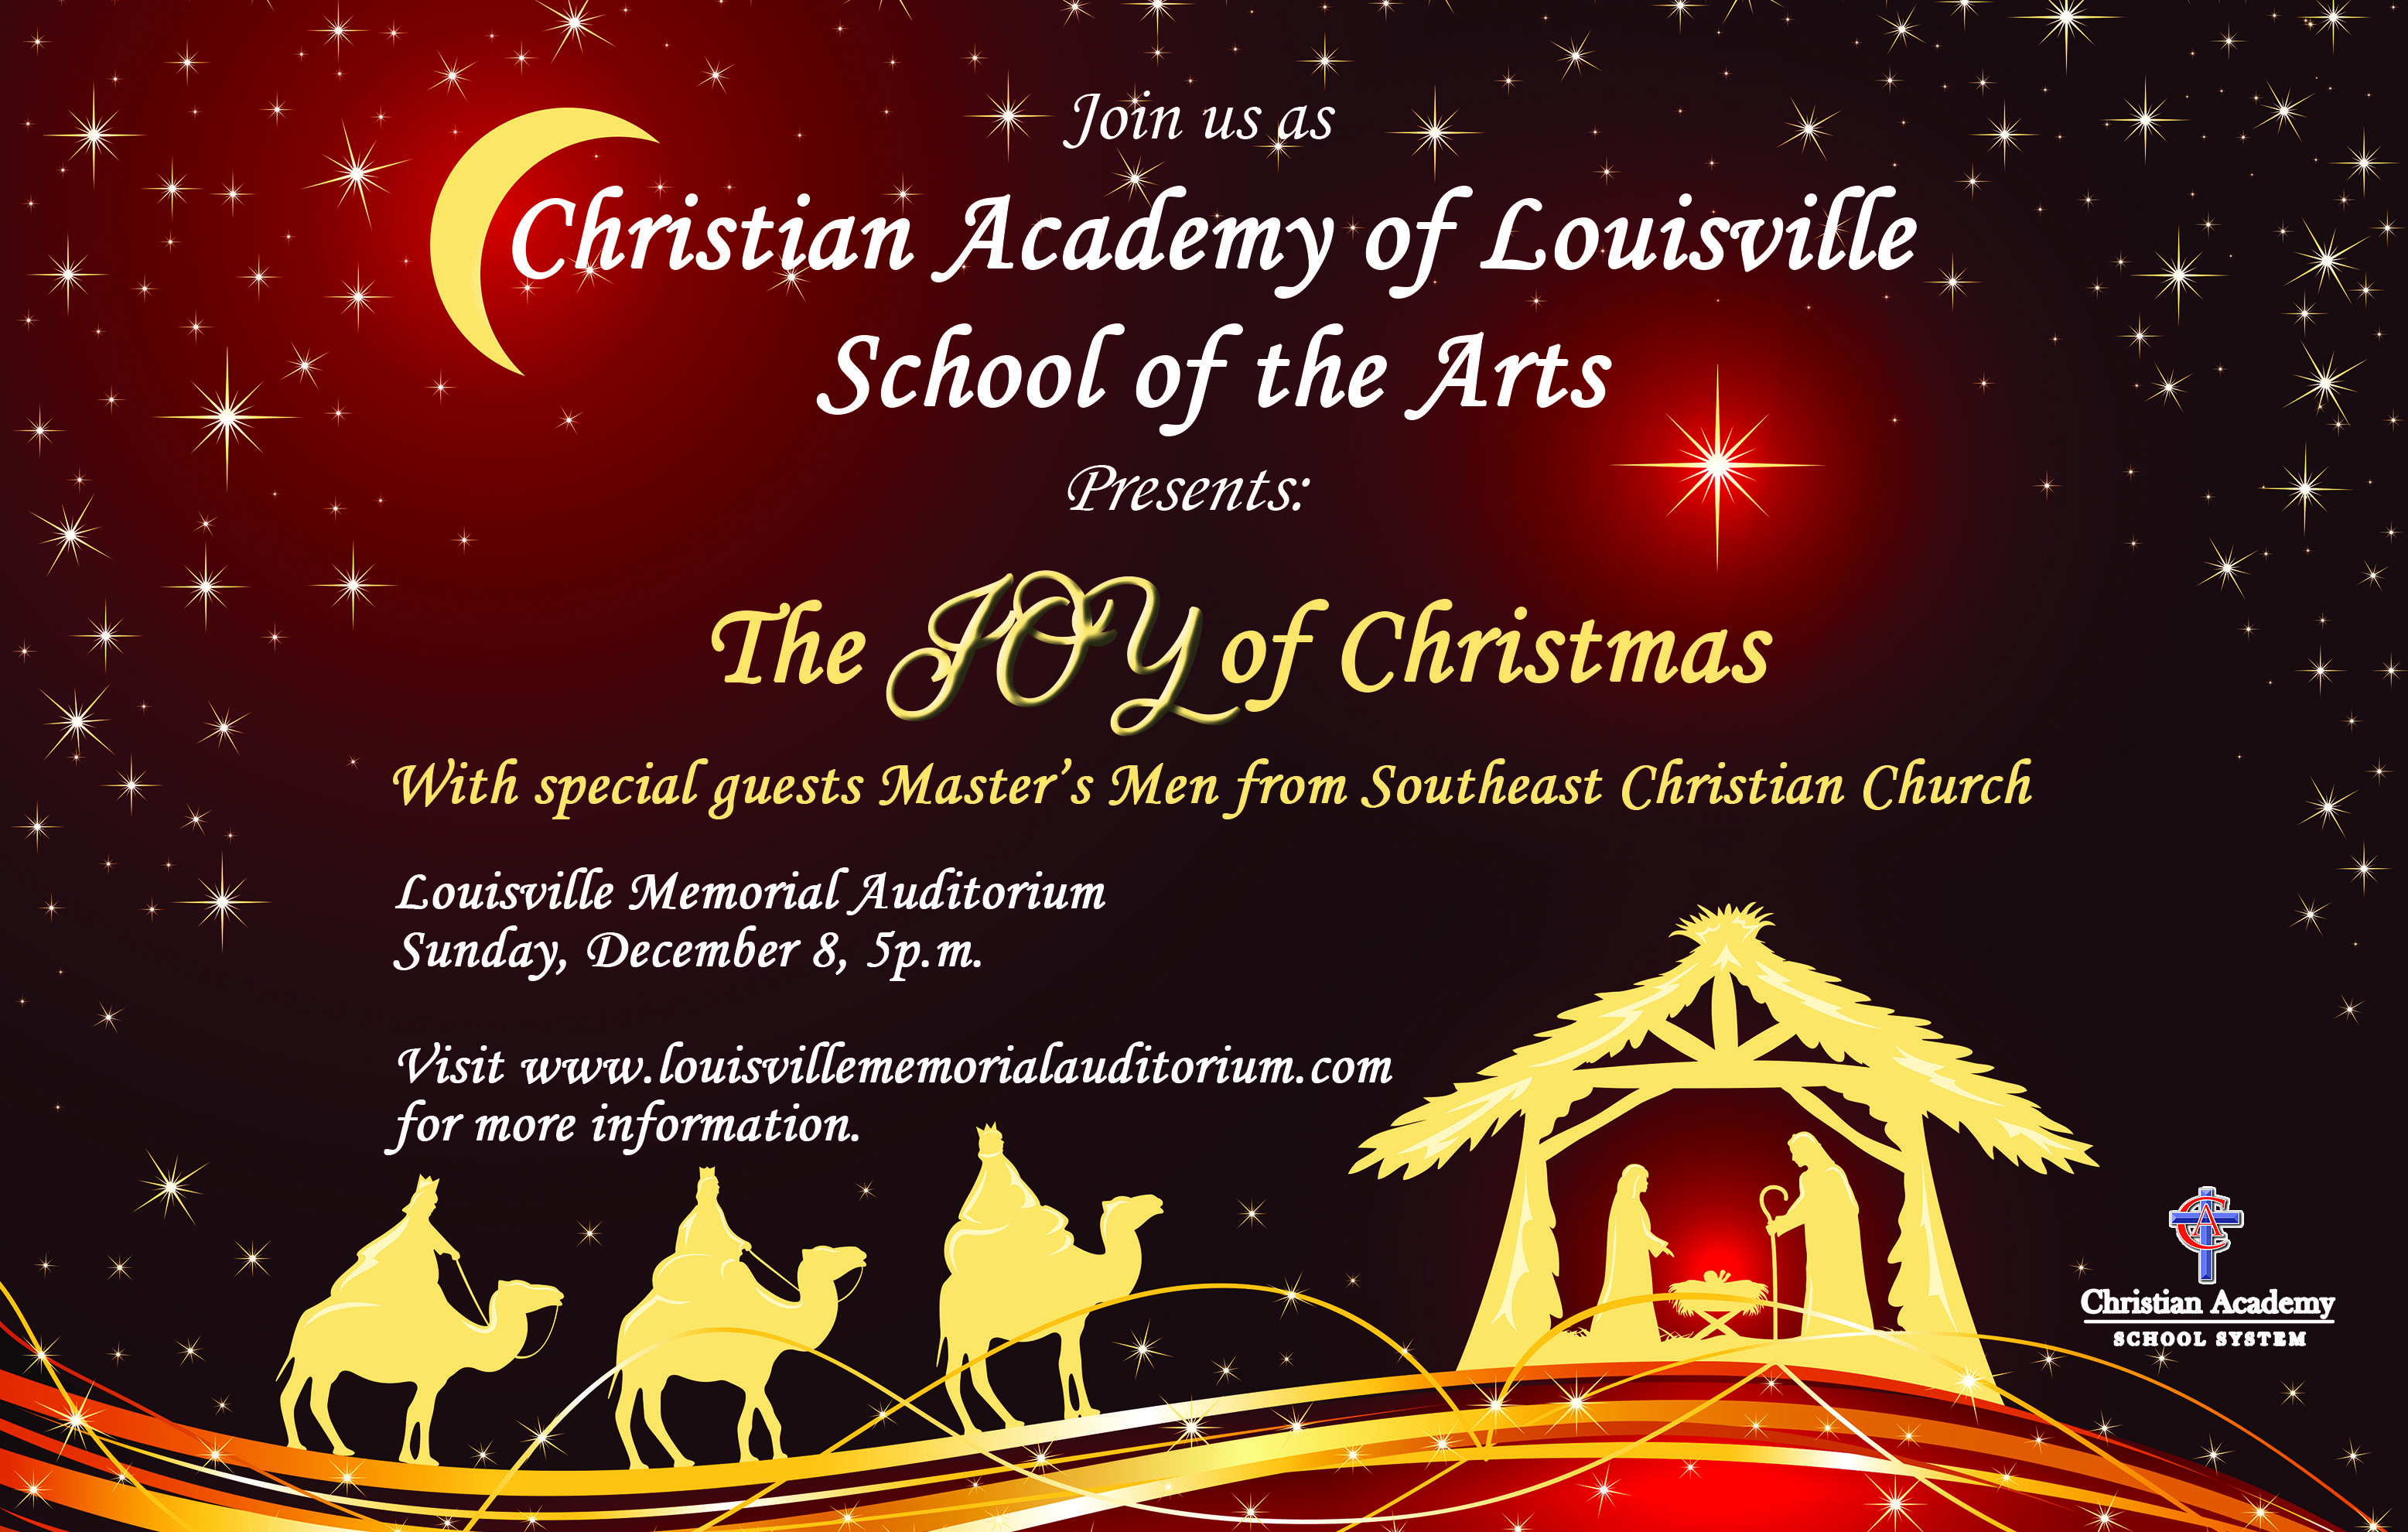 Christian Academy School System | Christian Academy of Louisville | School of the Arts | The Joy of Christmas | December 8